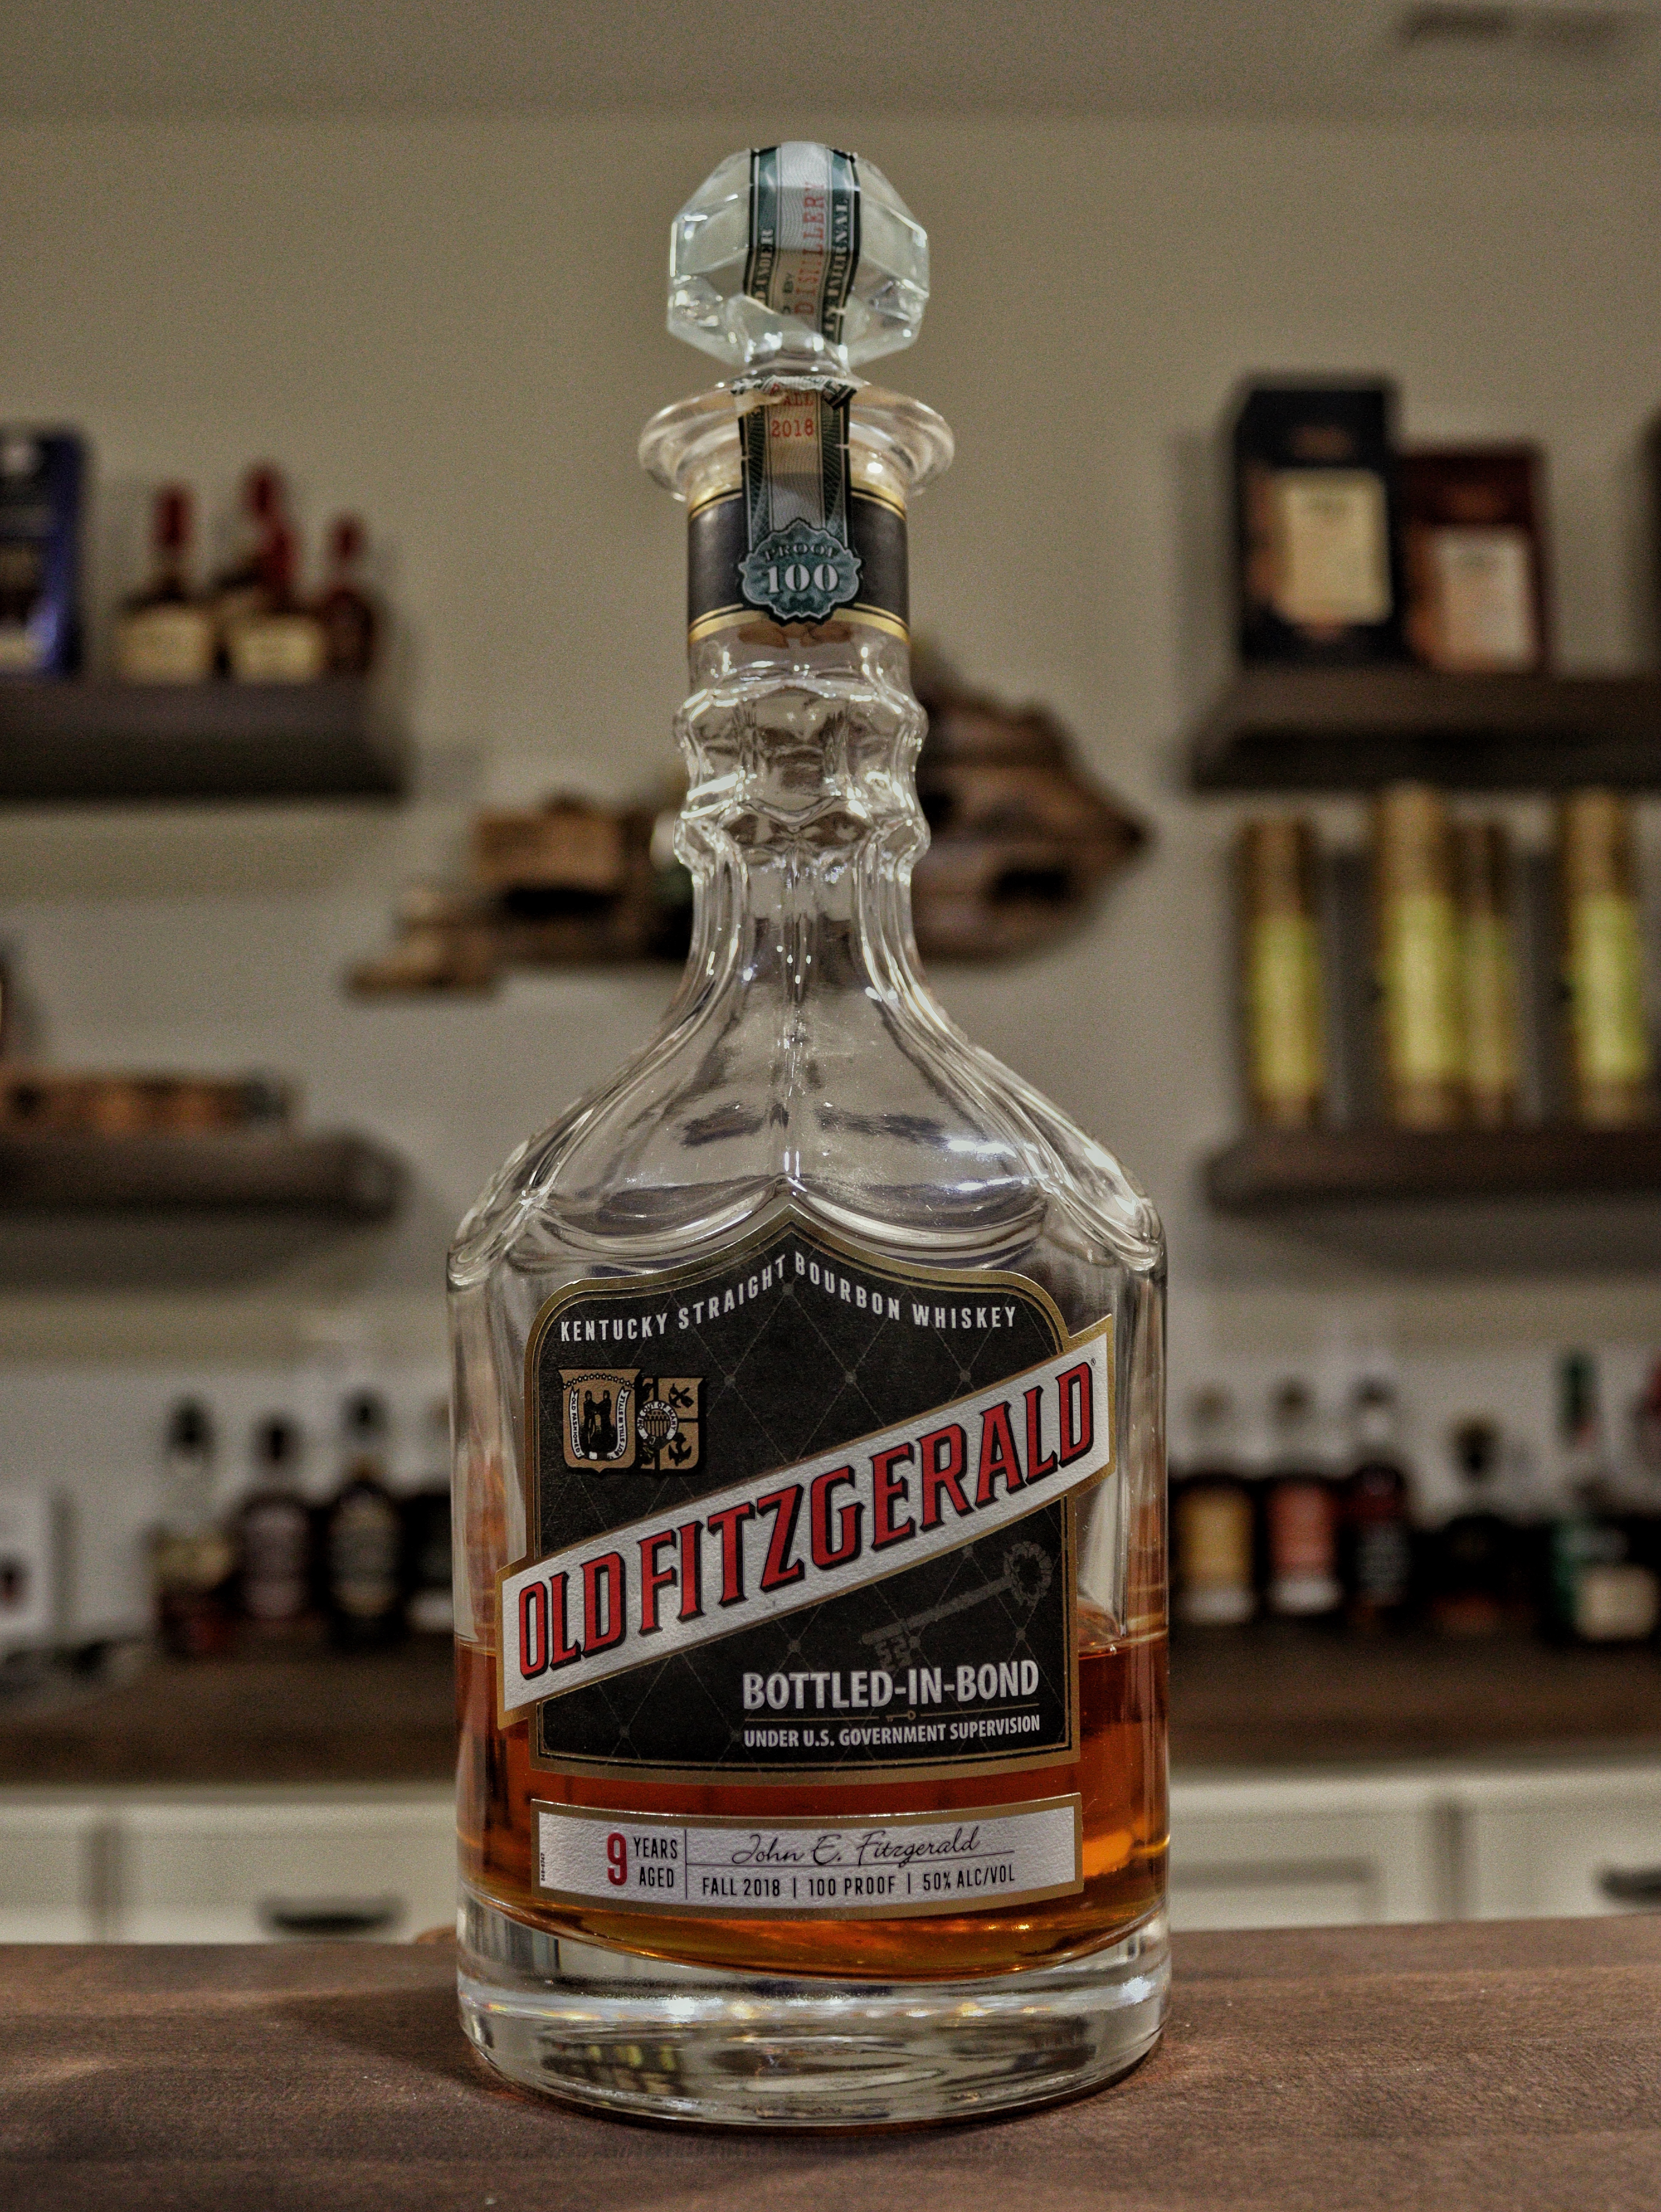 Decanter bottle sitting on a bar